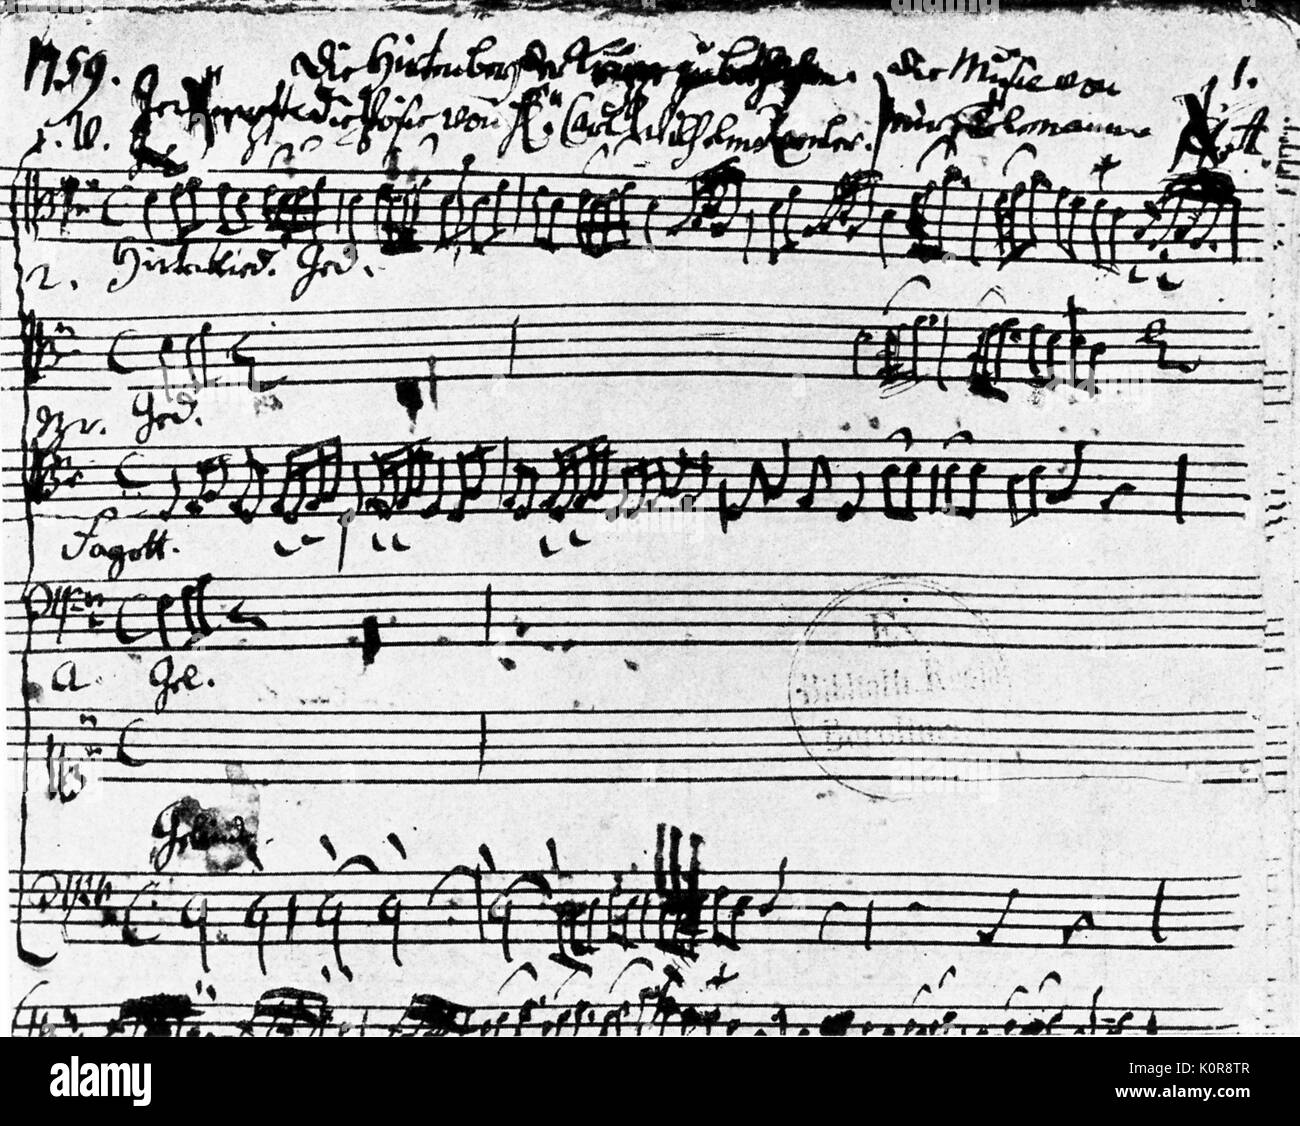 Telemann - Score 'Hirten bei der Krippe zu Bethlehem' German composer, 1681-1767 Stock Photo